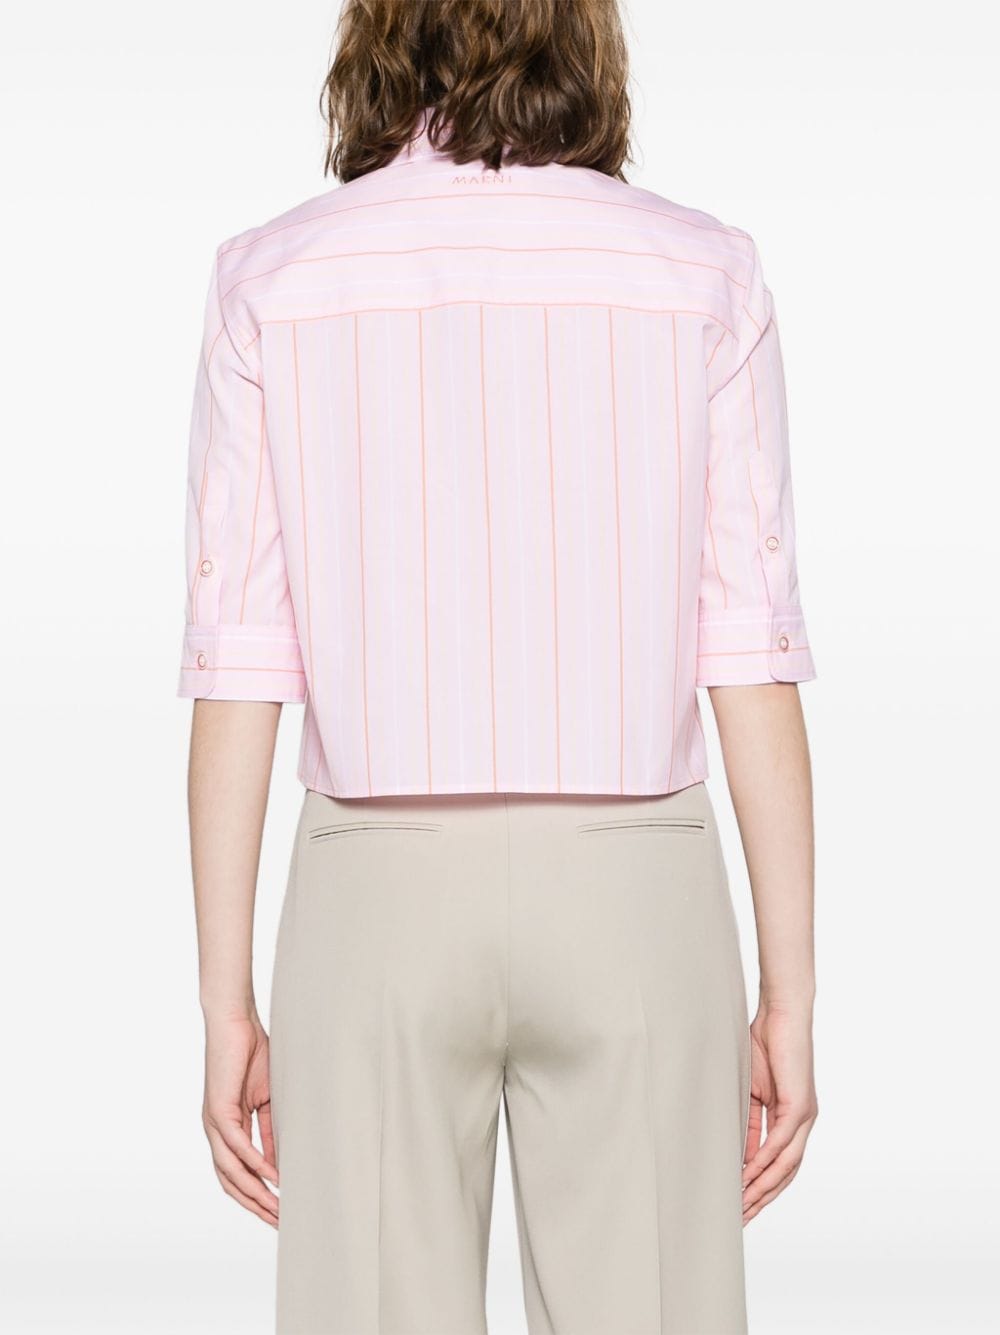 MARNI Pink Striped Short Sleeve Shirt for Women